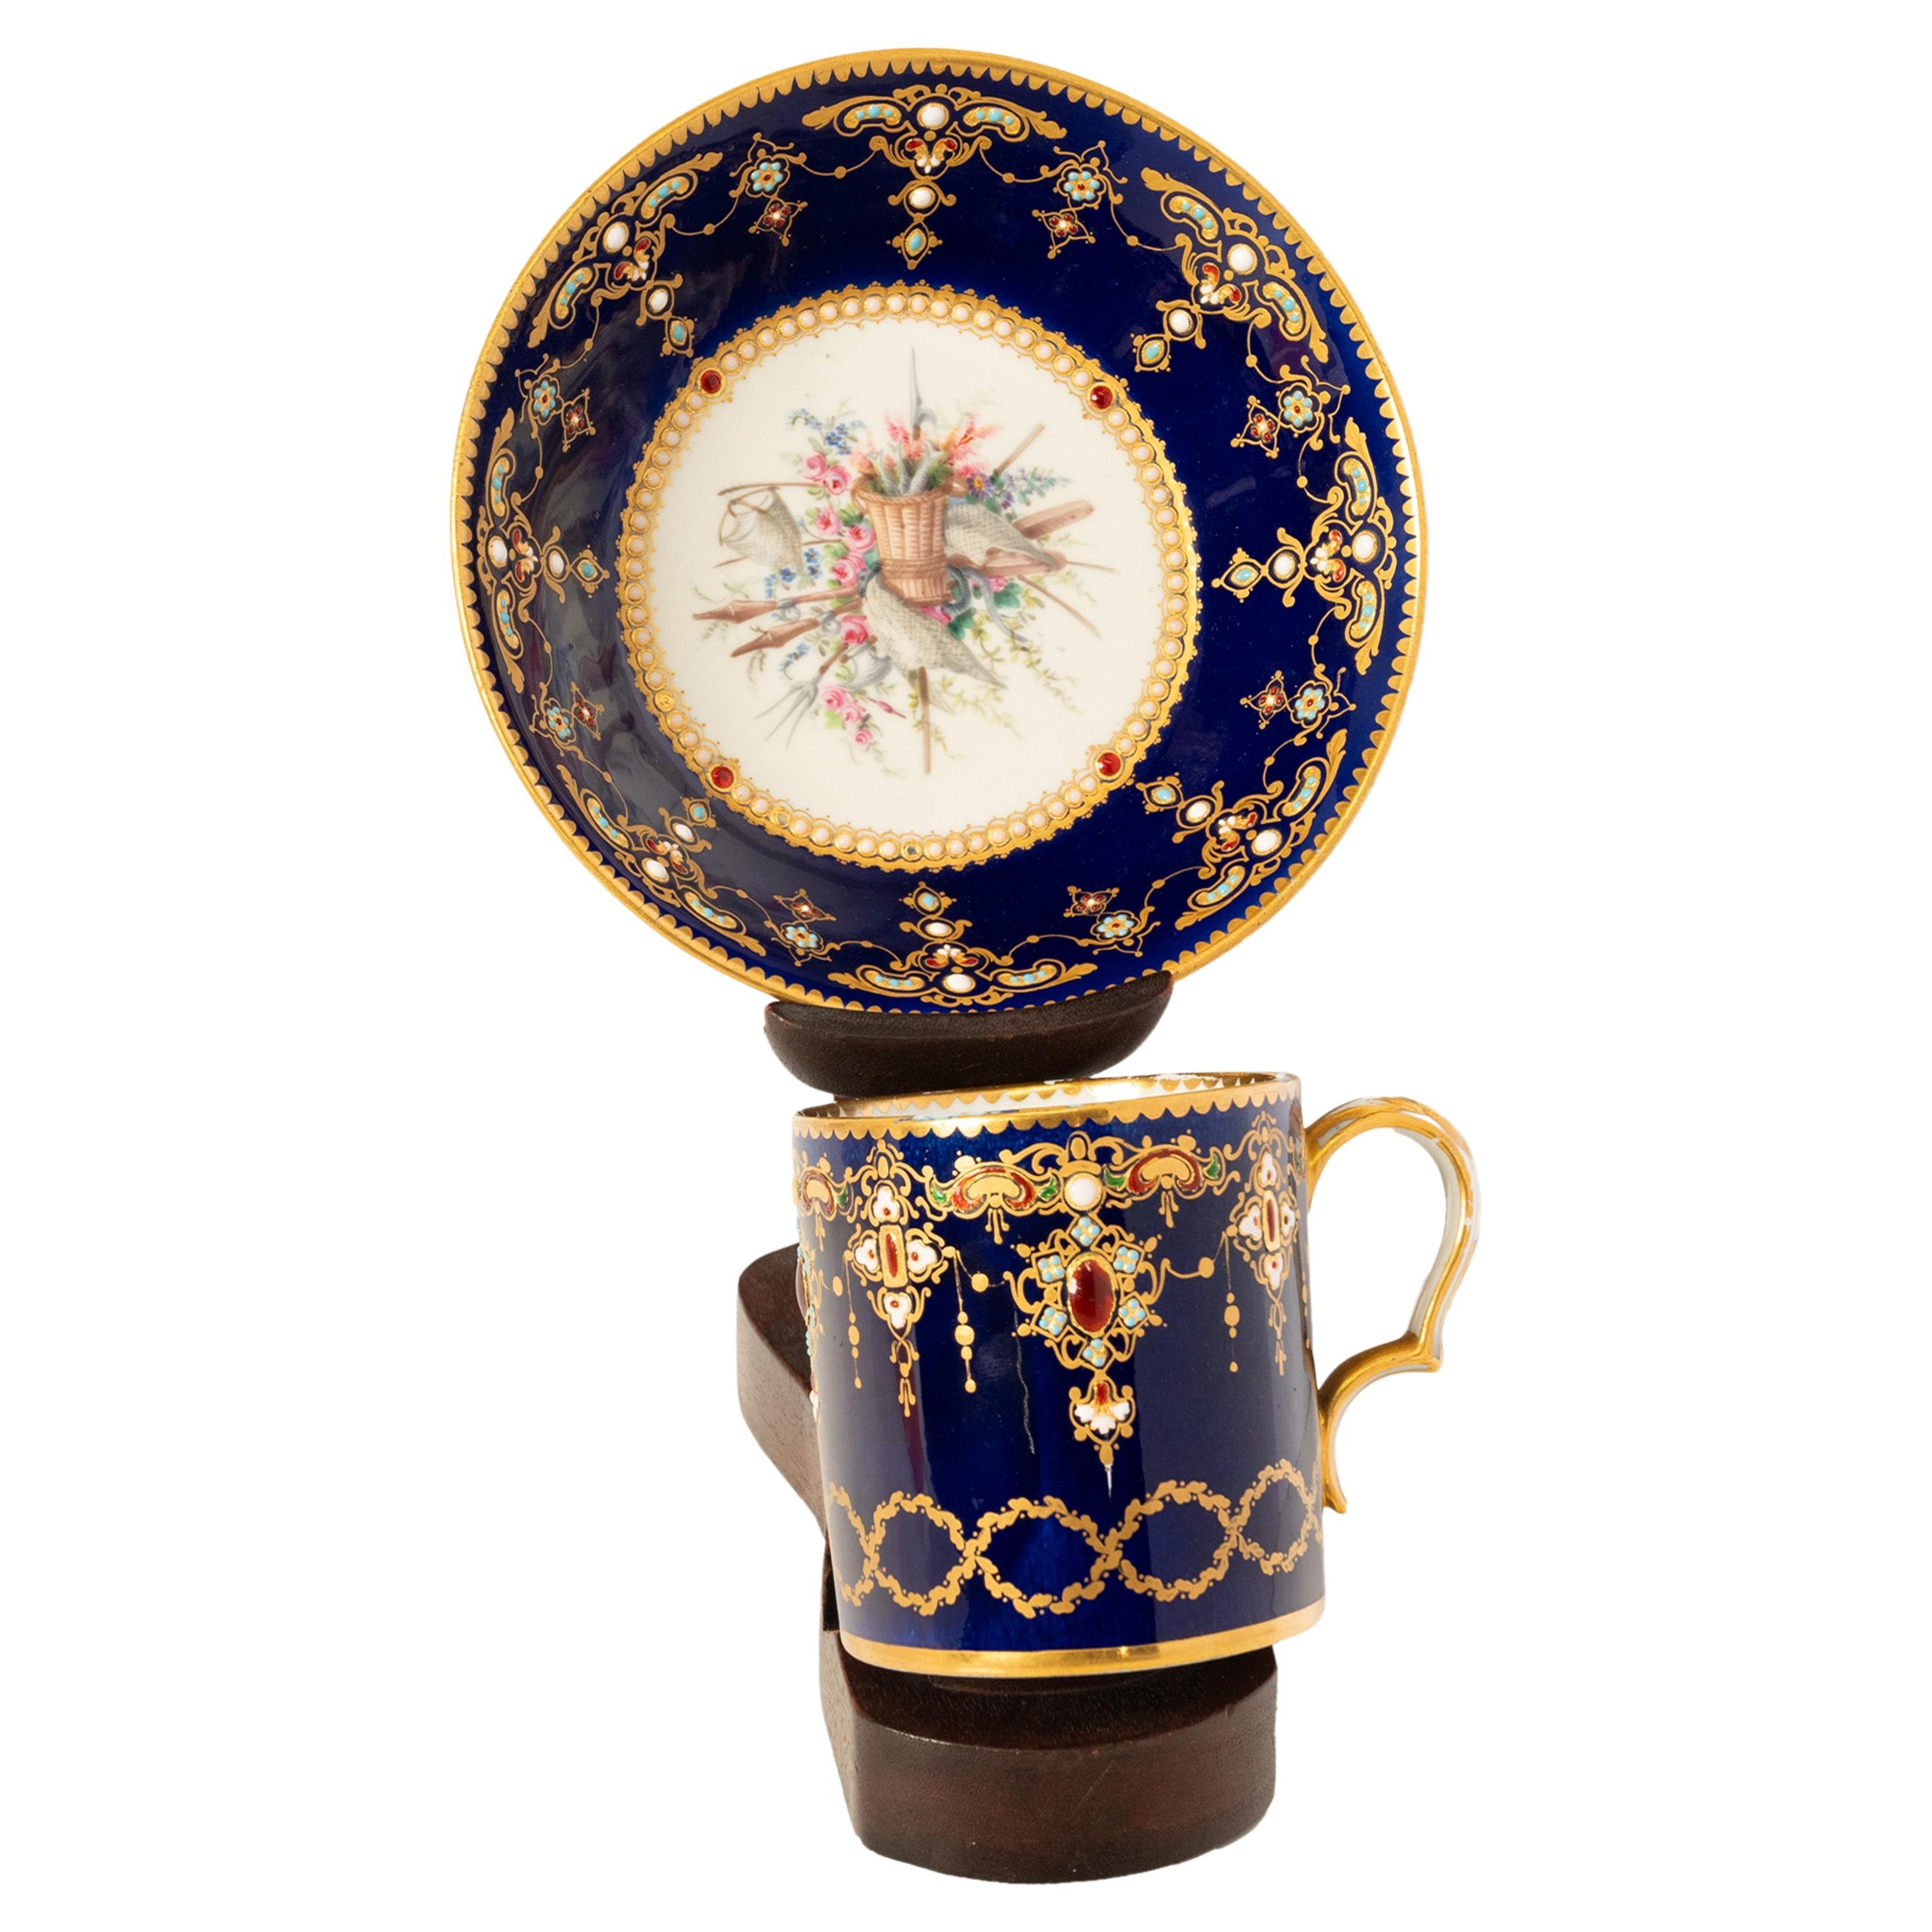 1750s Porcelain